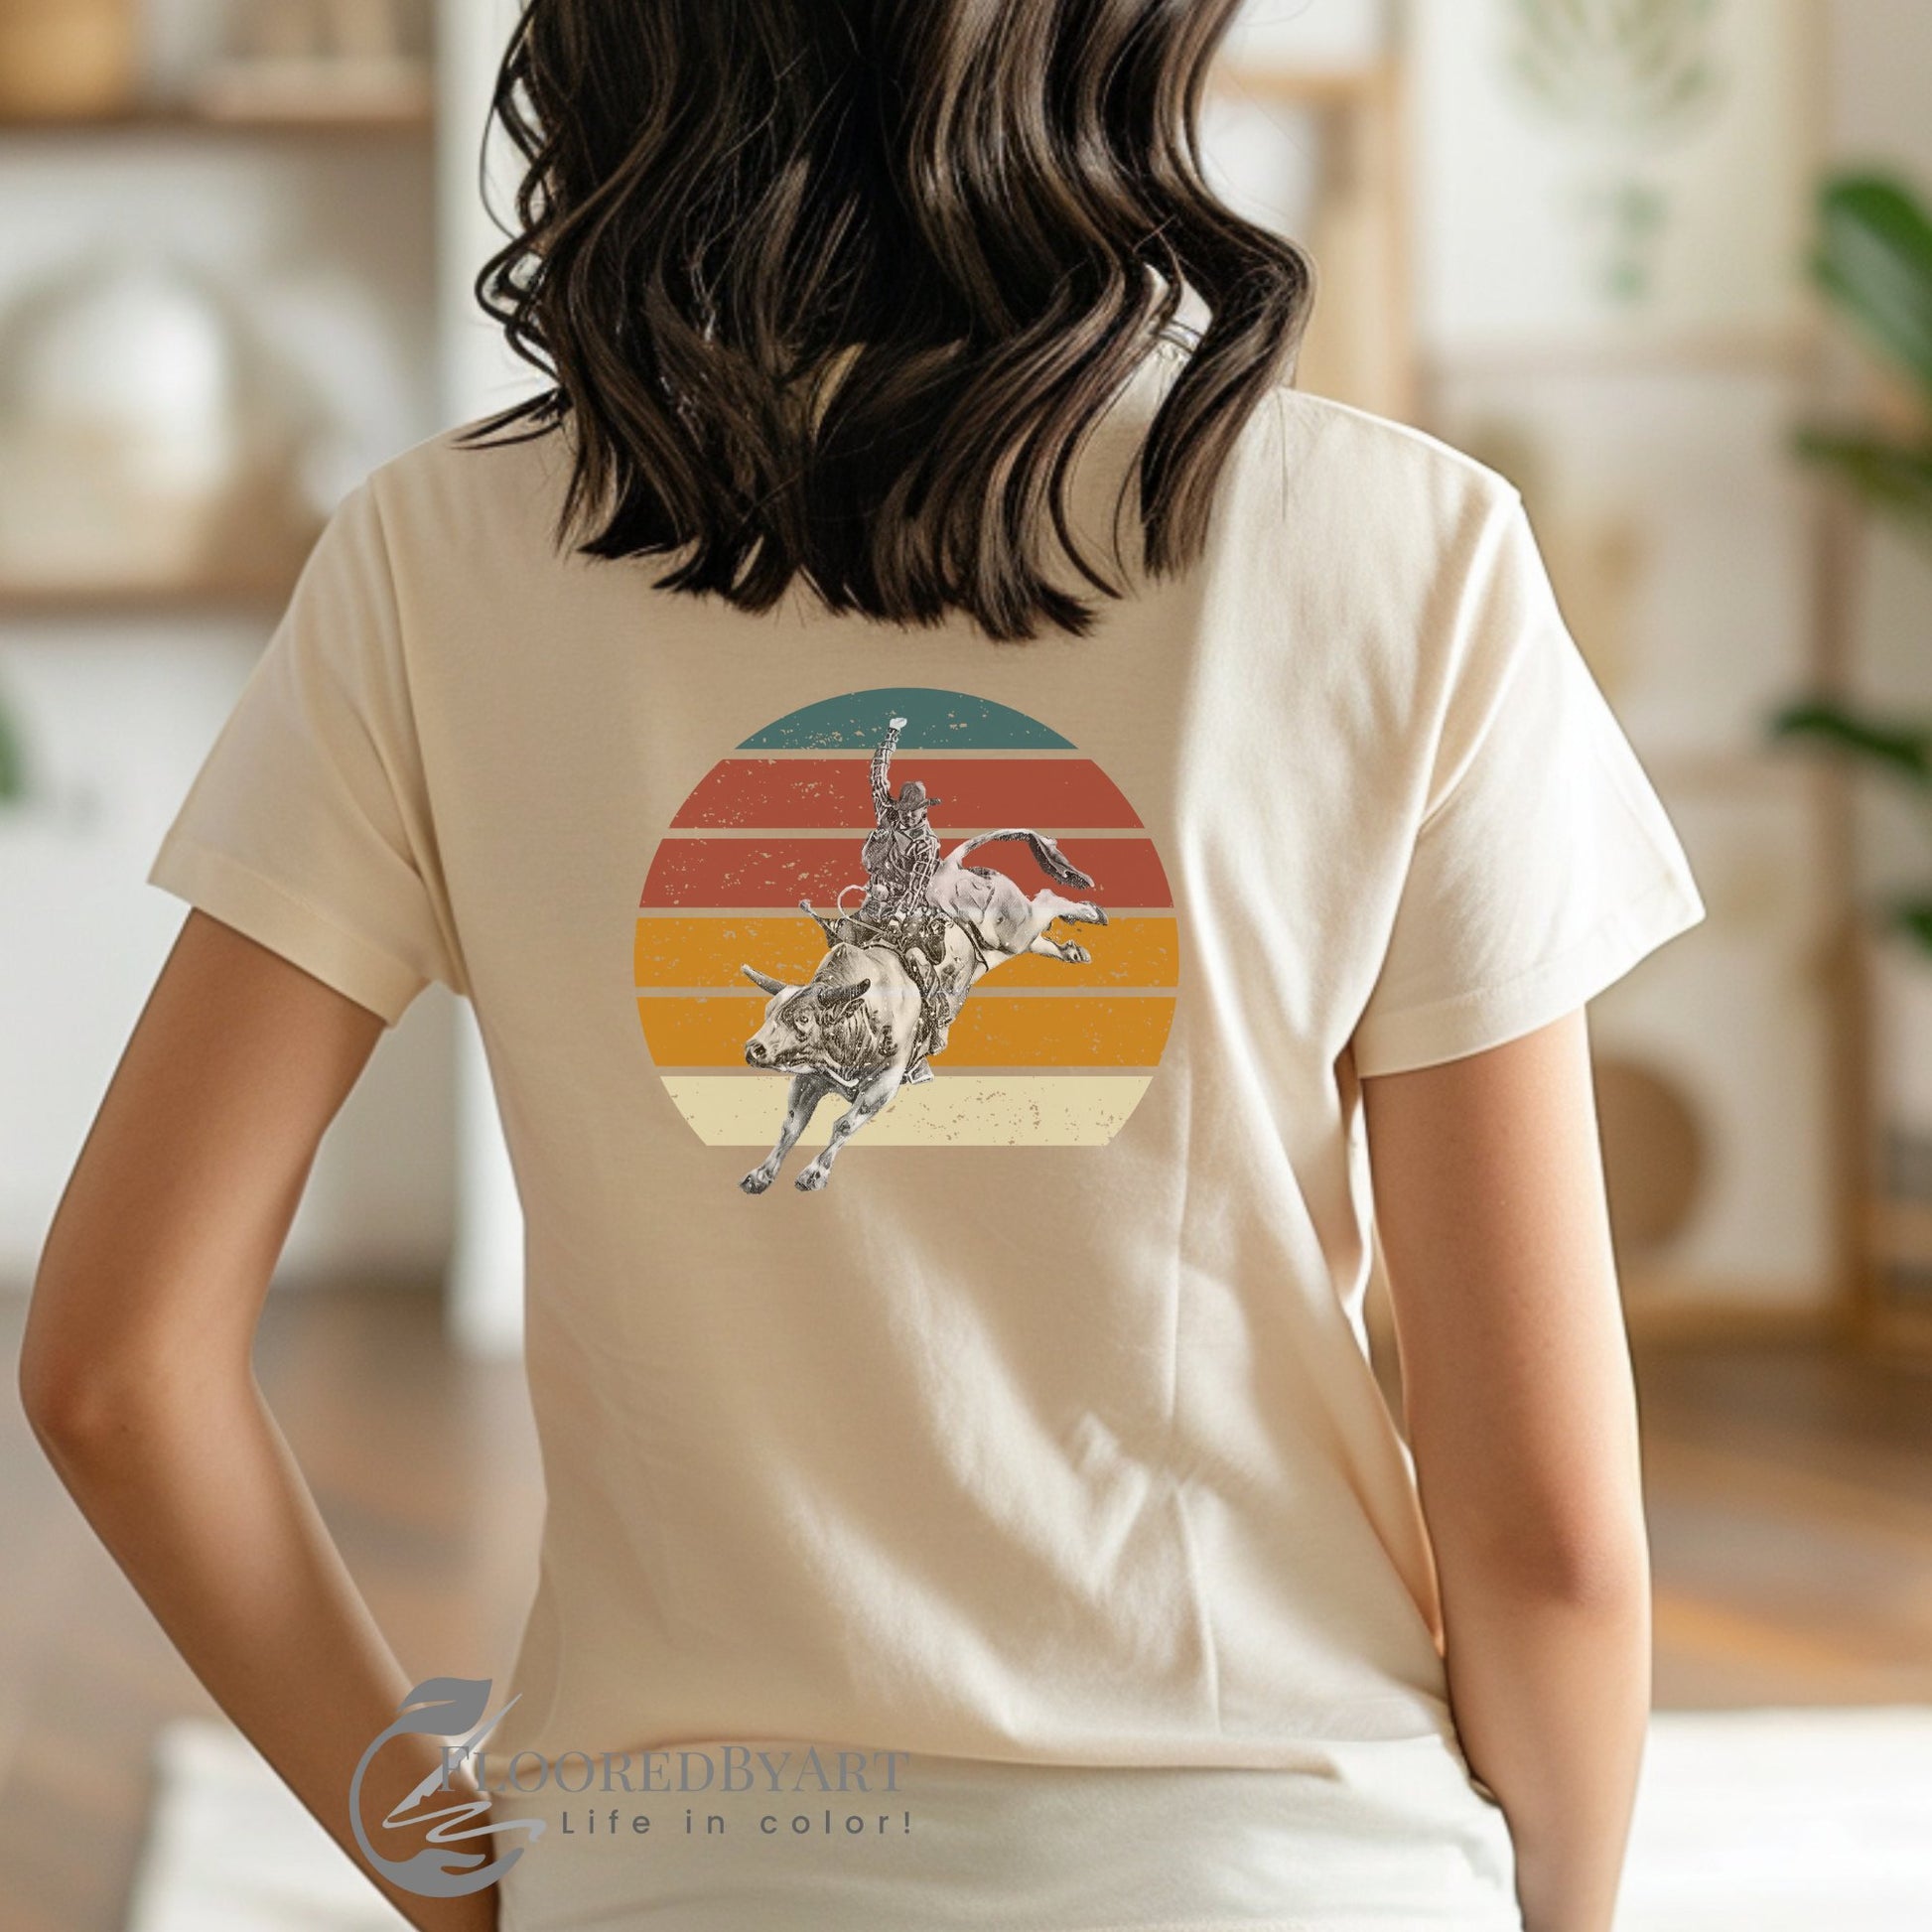 Rodeo Bull Rider 2 sided T-shirt, Rodeo Cowboy Shirt - FlooredByArt